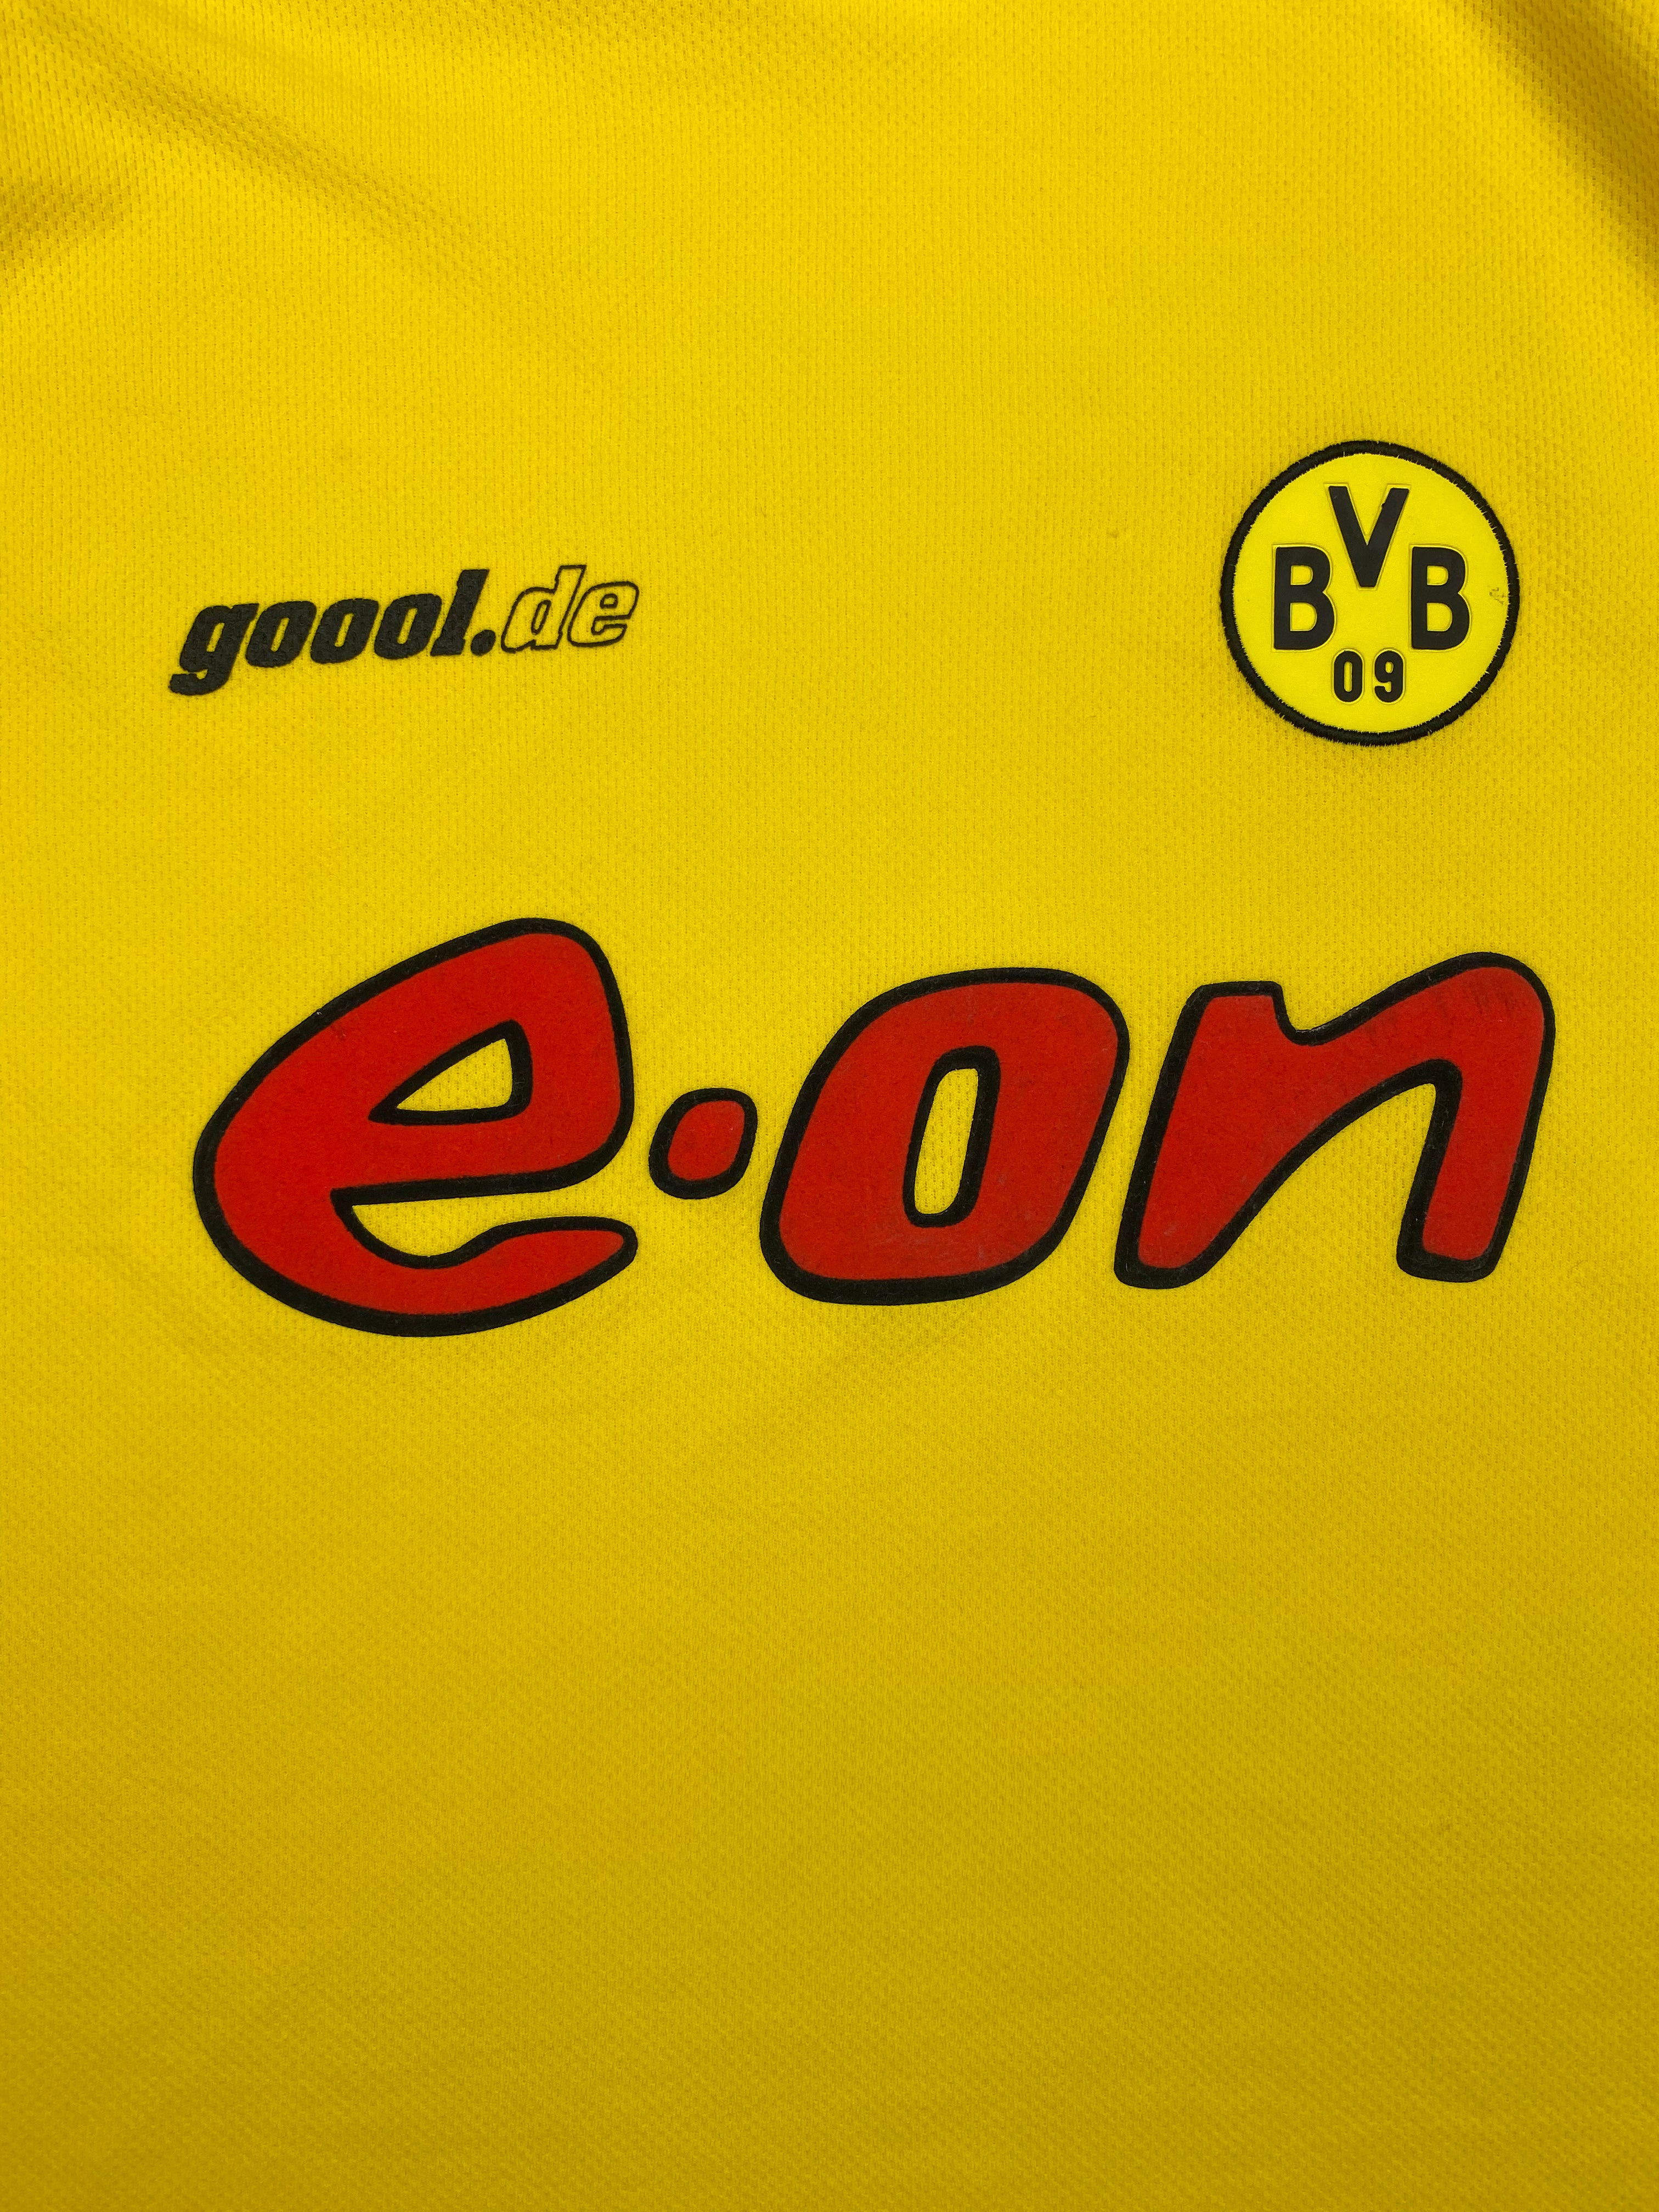 2001/02 Borussia Dortmund L/S European Home Shirt (XXL) 9/10